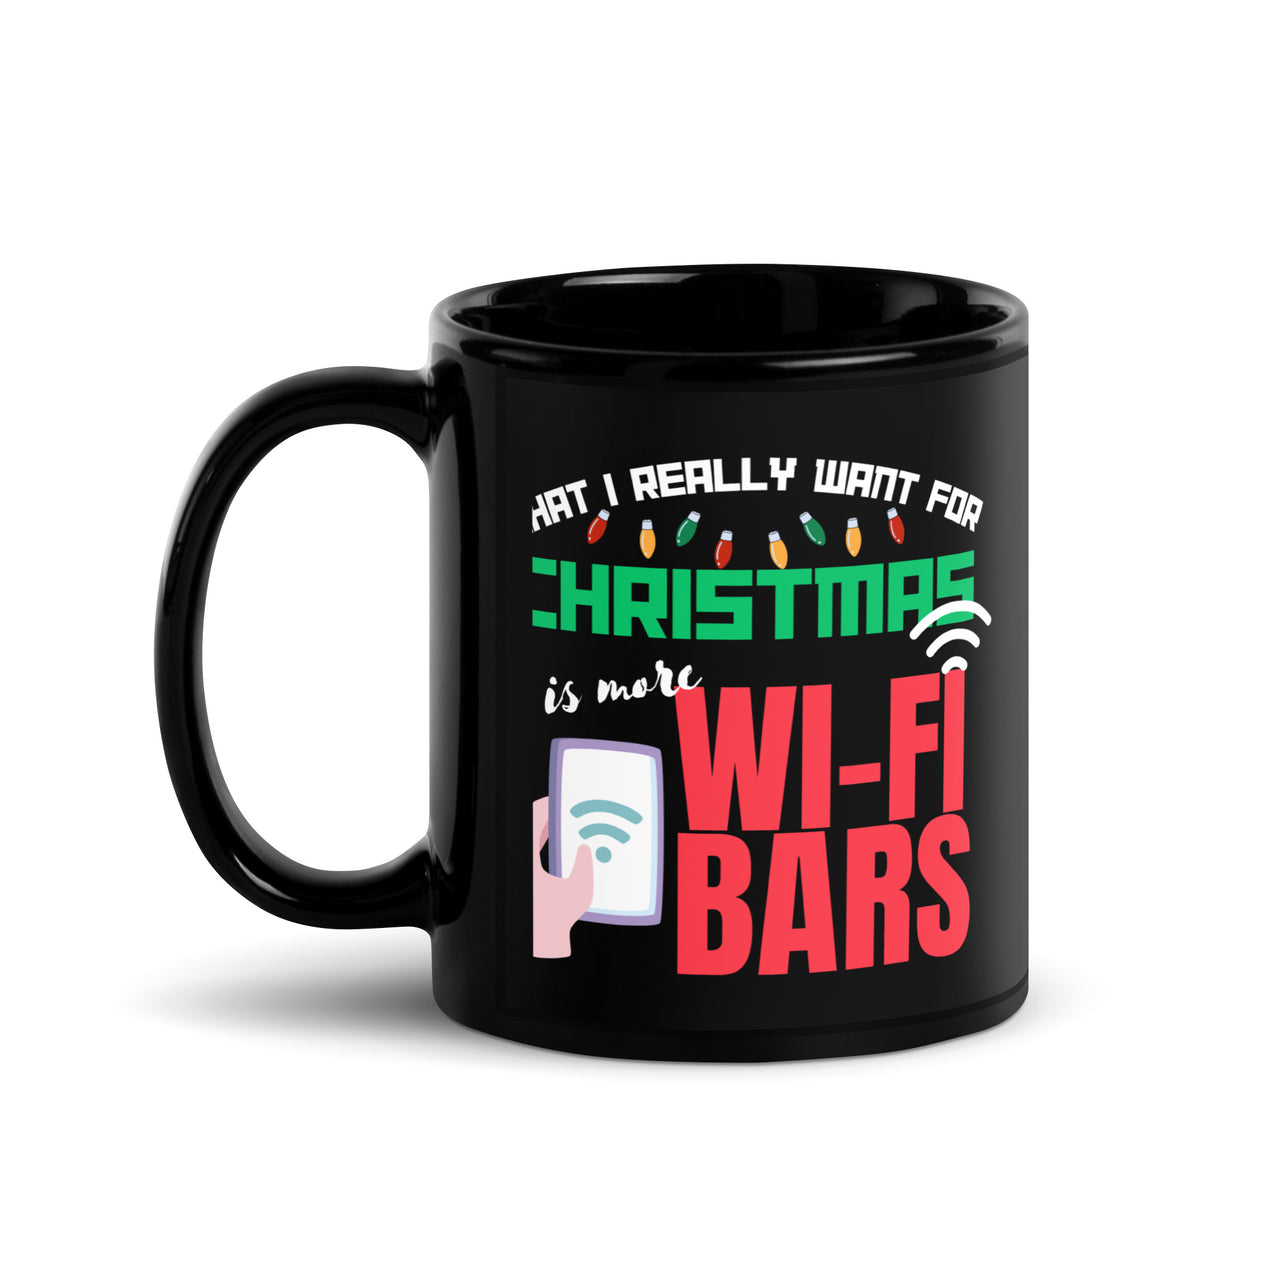 More Wi-Fi Bars for Holiday Connectivity Black Mug